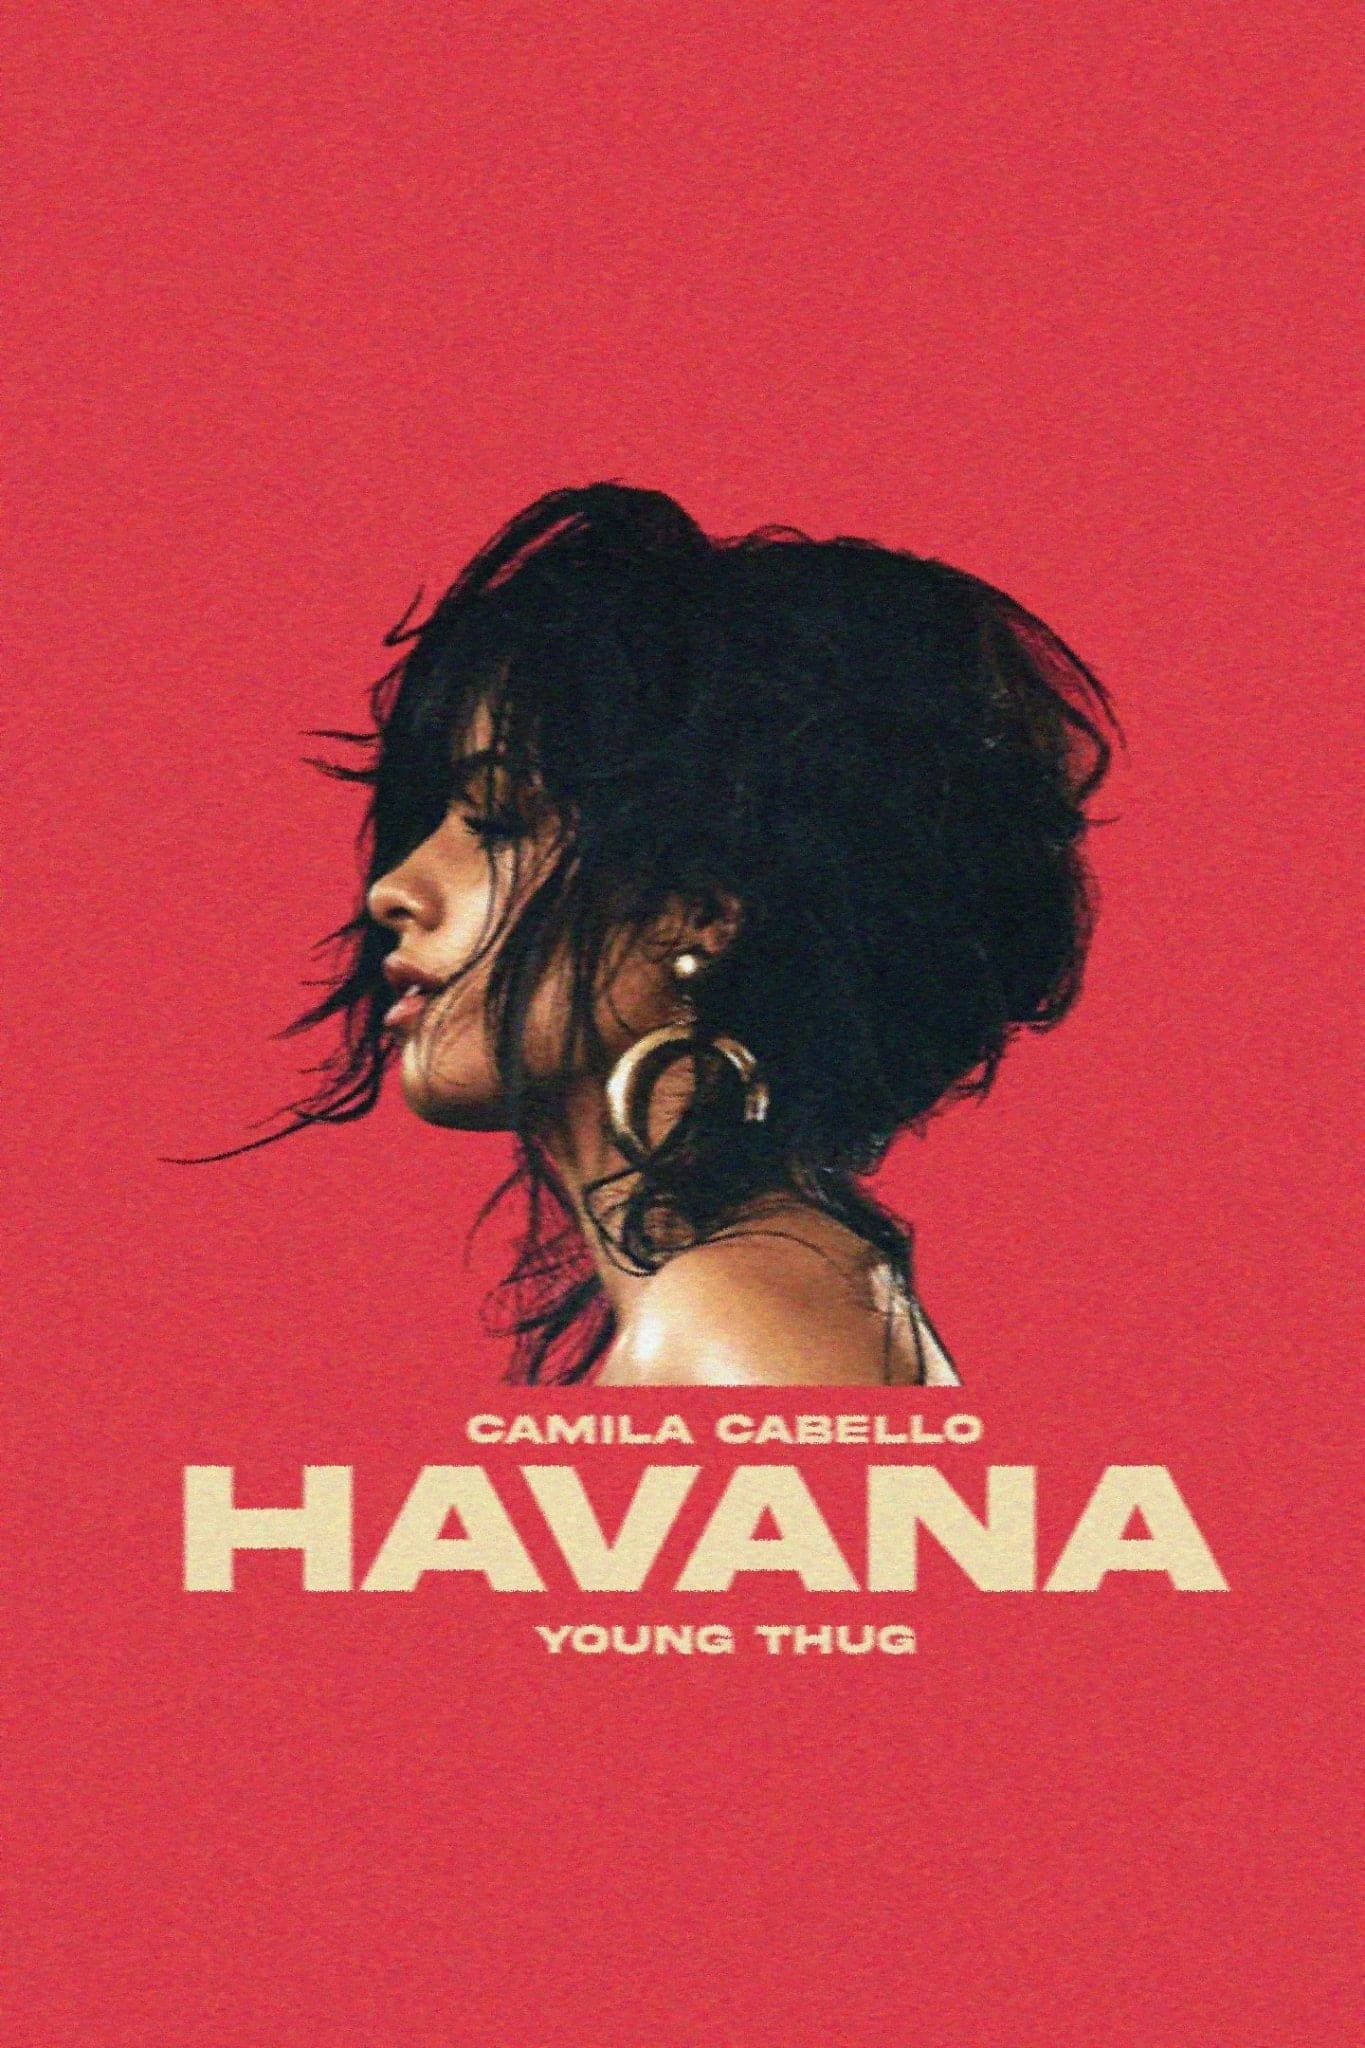 Camila Cabello X Young Thug ‘Havana’ Poster - Posters Plug